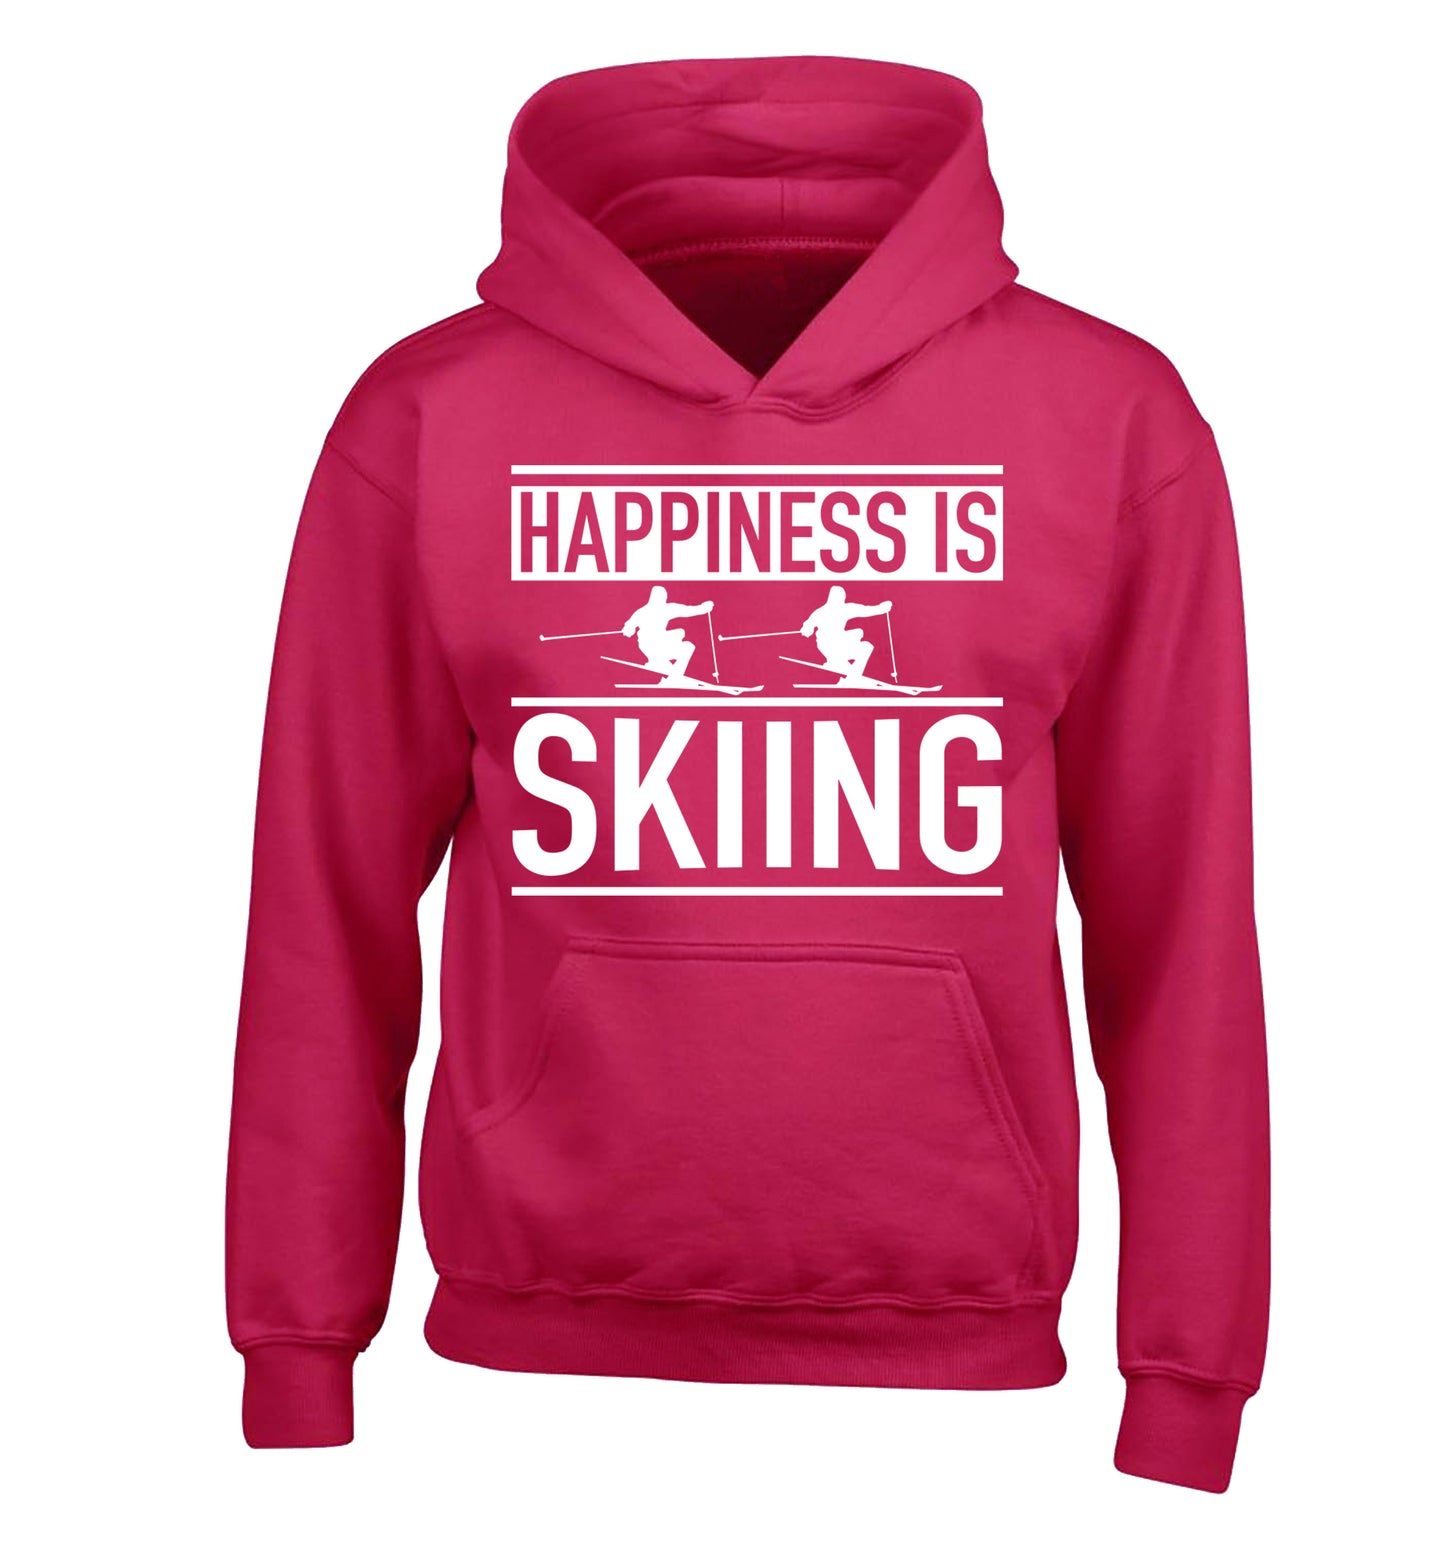 Happiness is skiing children's pink hoodie 12-14 Years